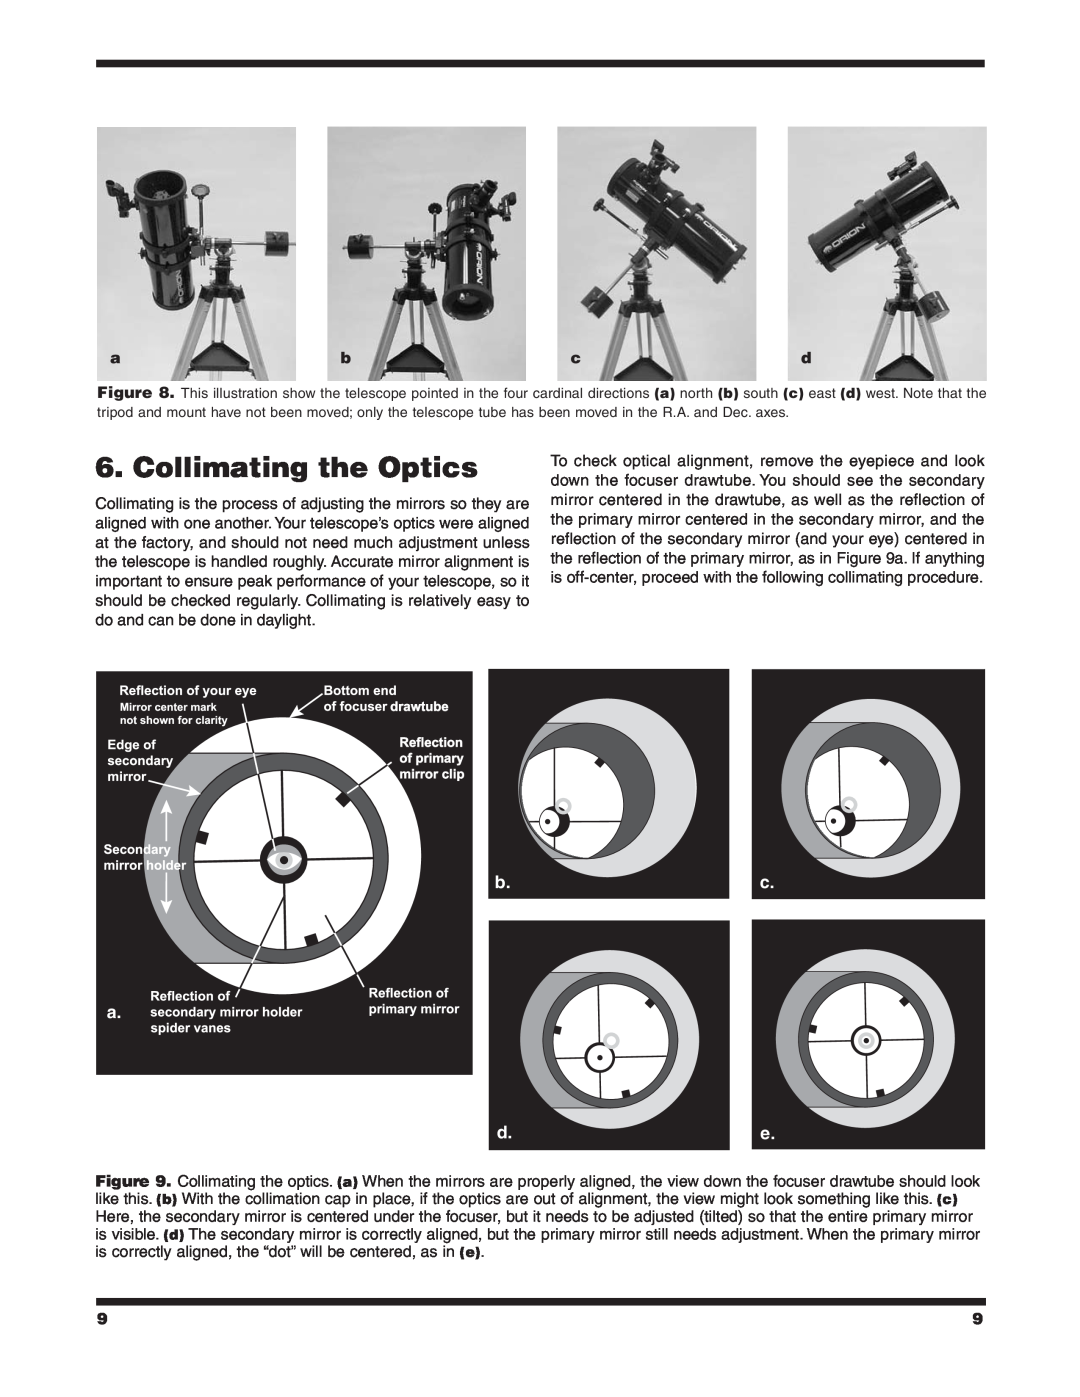 Orion 4.5 EQ instruction manual Collimating the Optics, b.c a d.e 